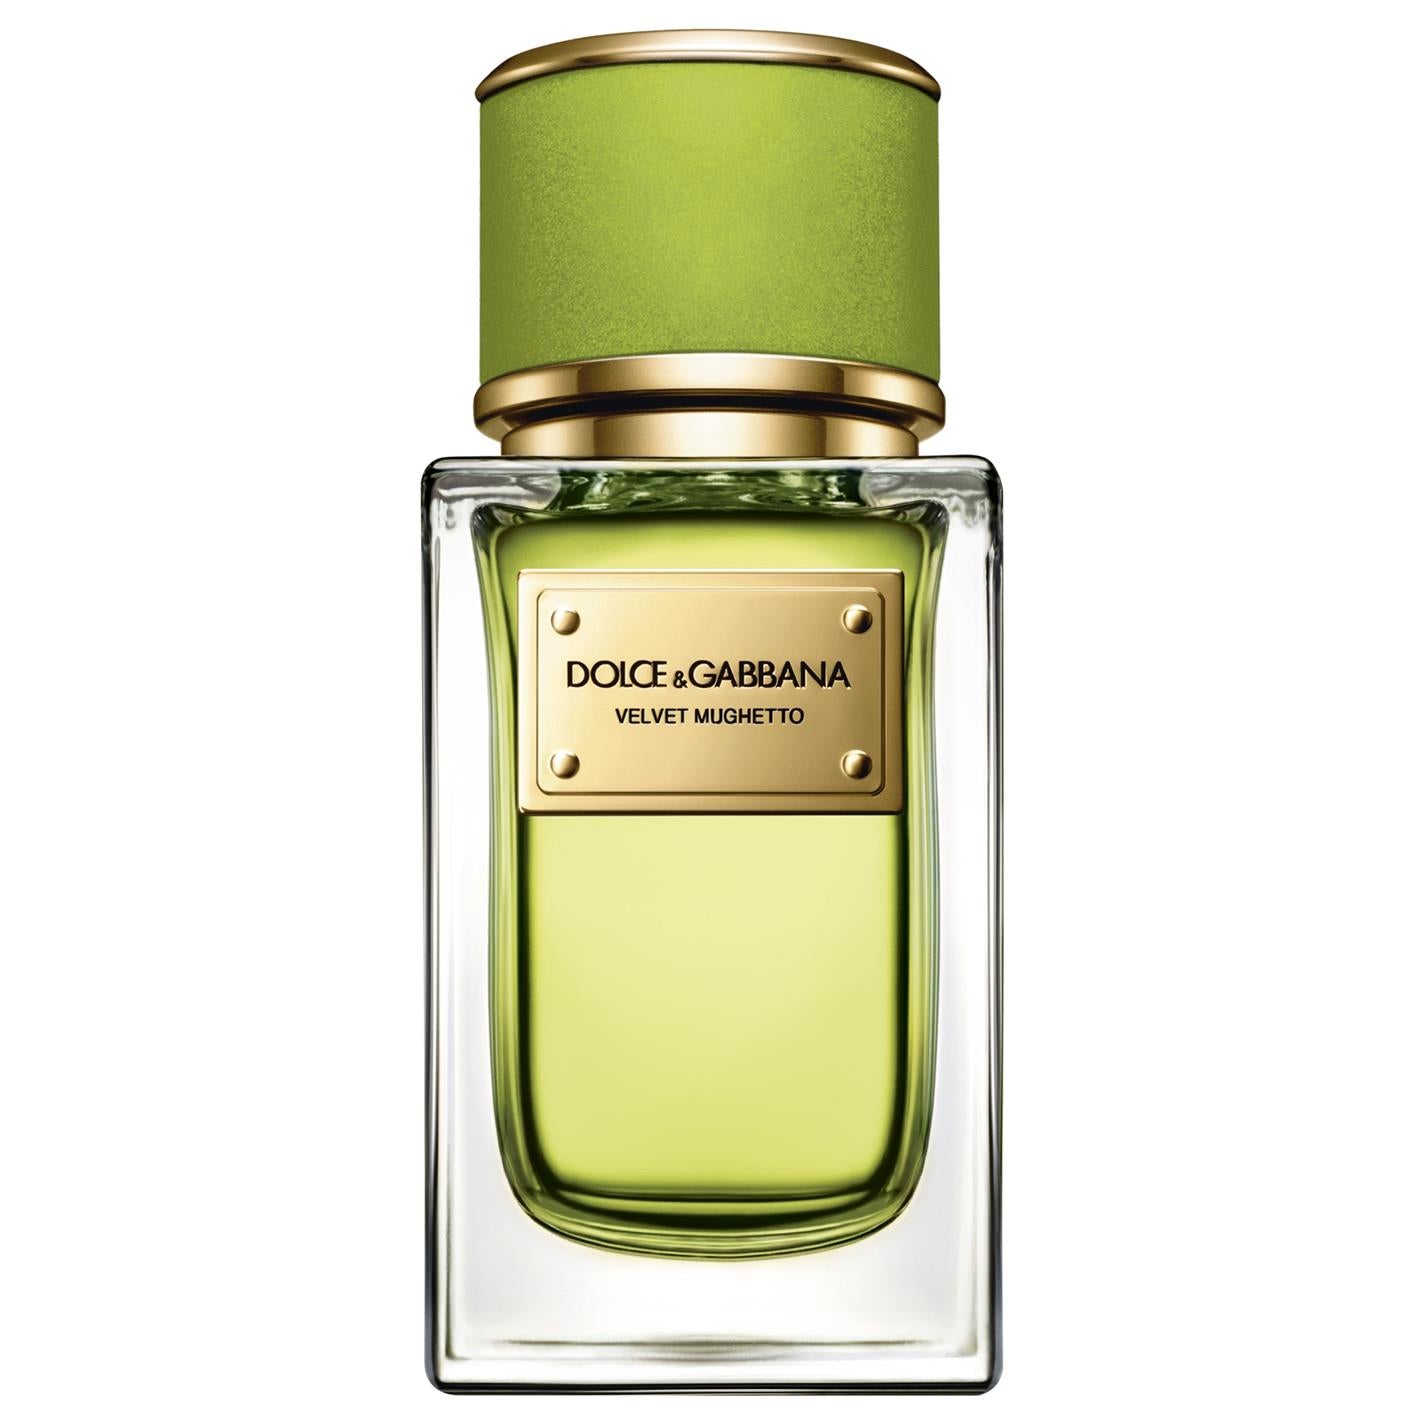 Dolce & Gabbana VELVET Mughetto 1.5 ml 0.05 fl. onz. muestra oficial de perfume